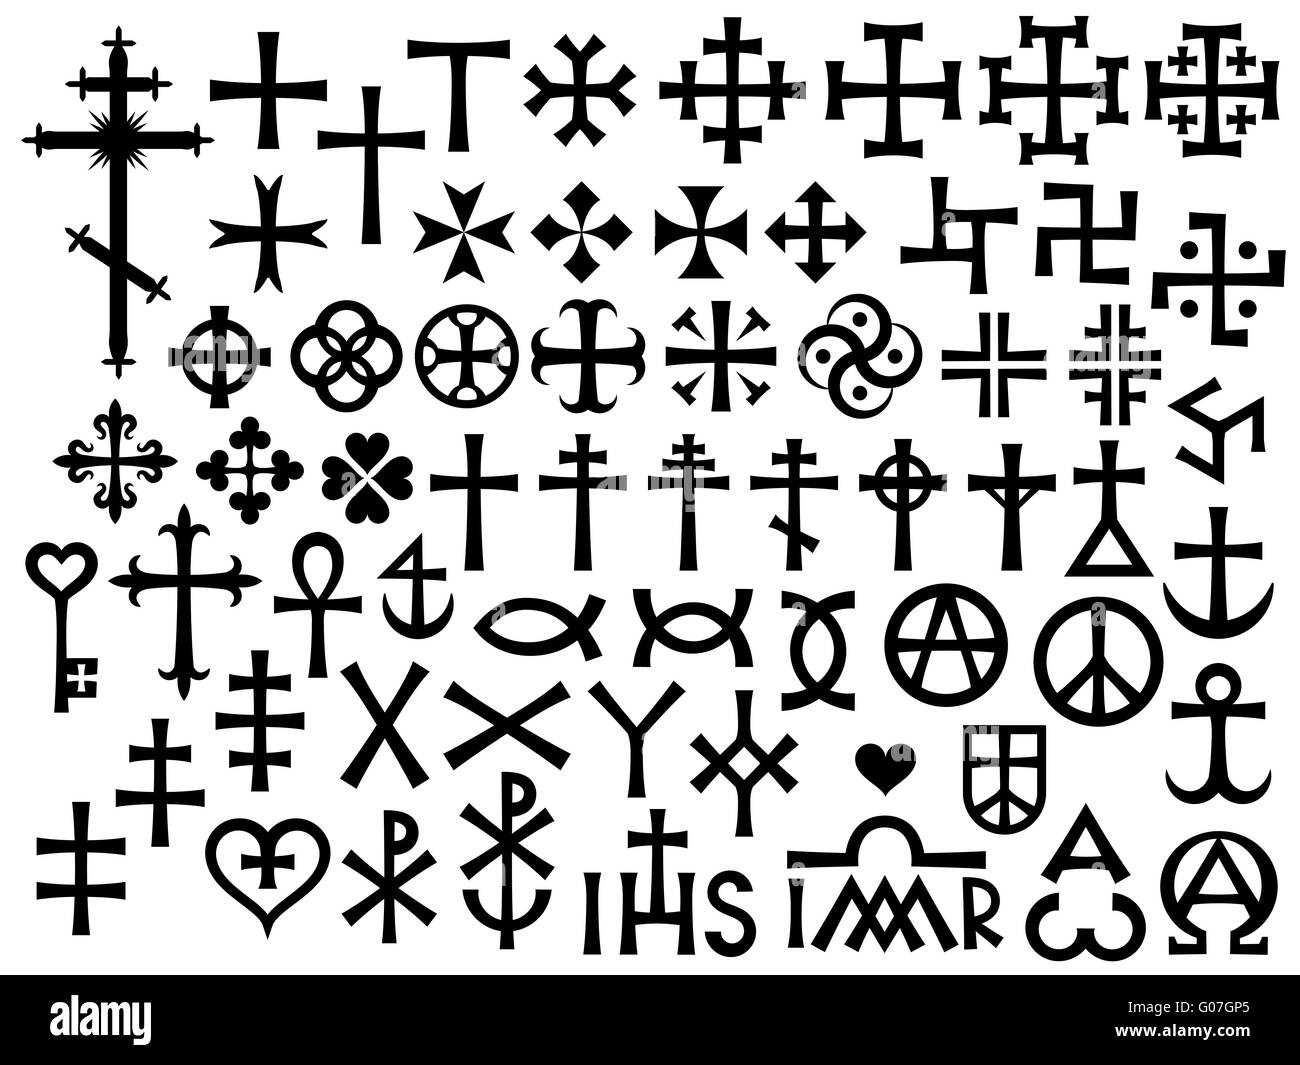 Heraldic Crosses and Christian Monograms Stock Photo